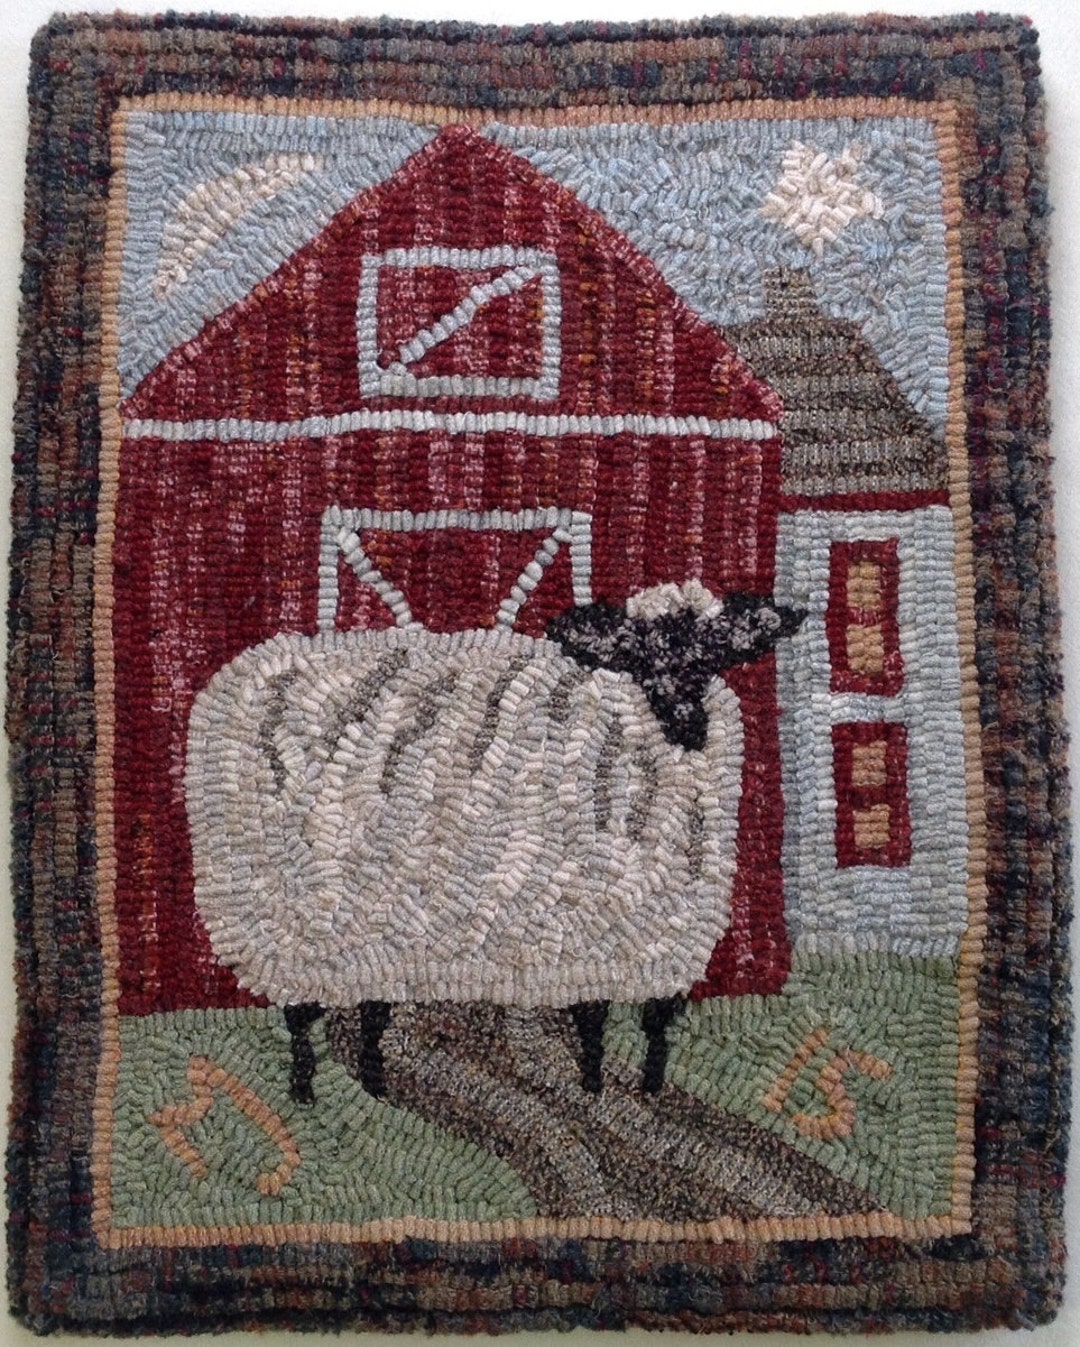 Rug Hooking PATTERN, Annabelle the Wandering Sheep, 14 X 18, P107, DIY  Primitive Folk Art Sheep Design -  Canada